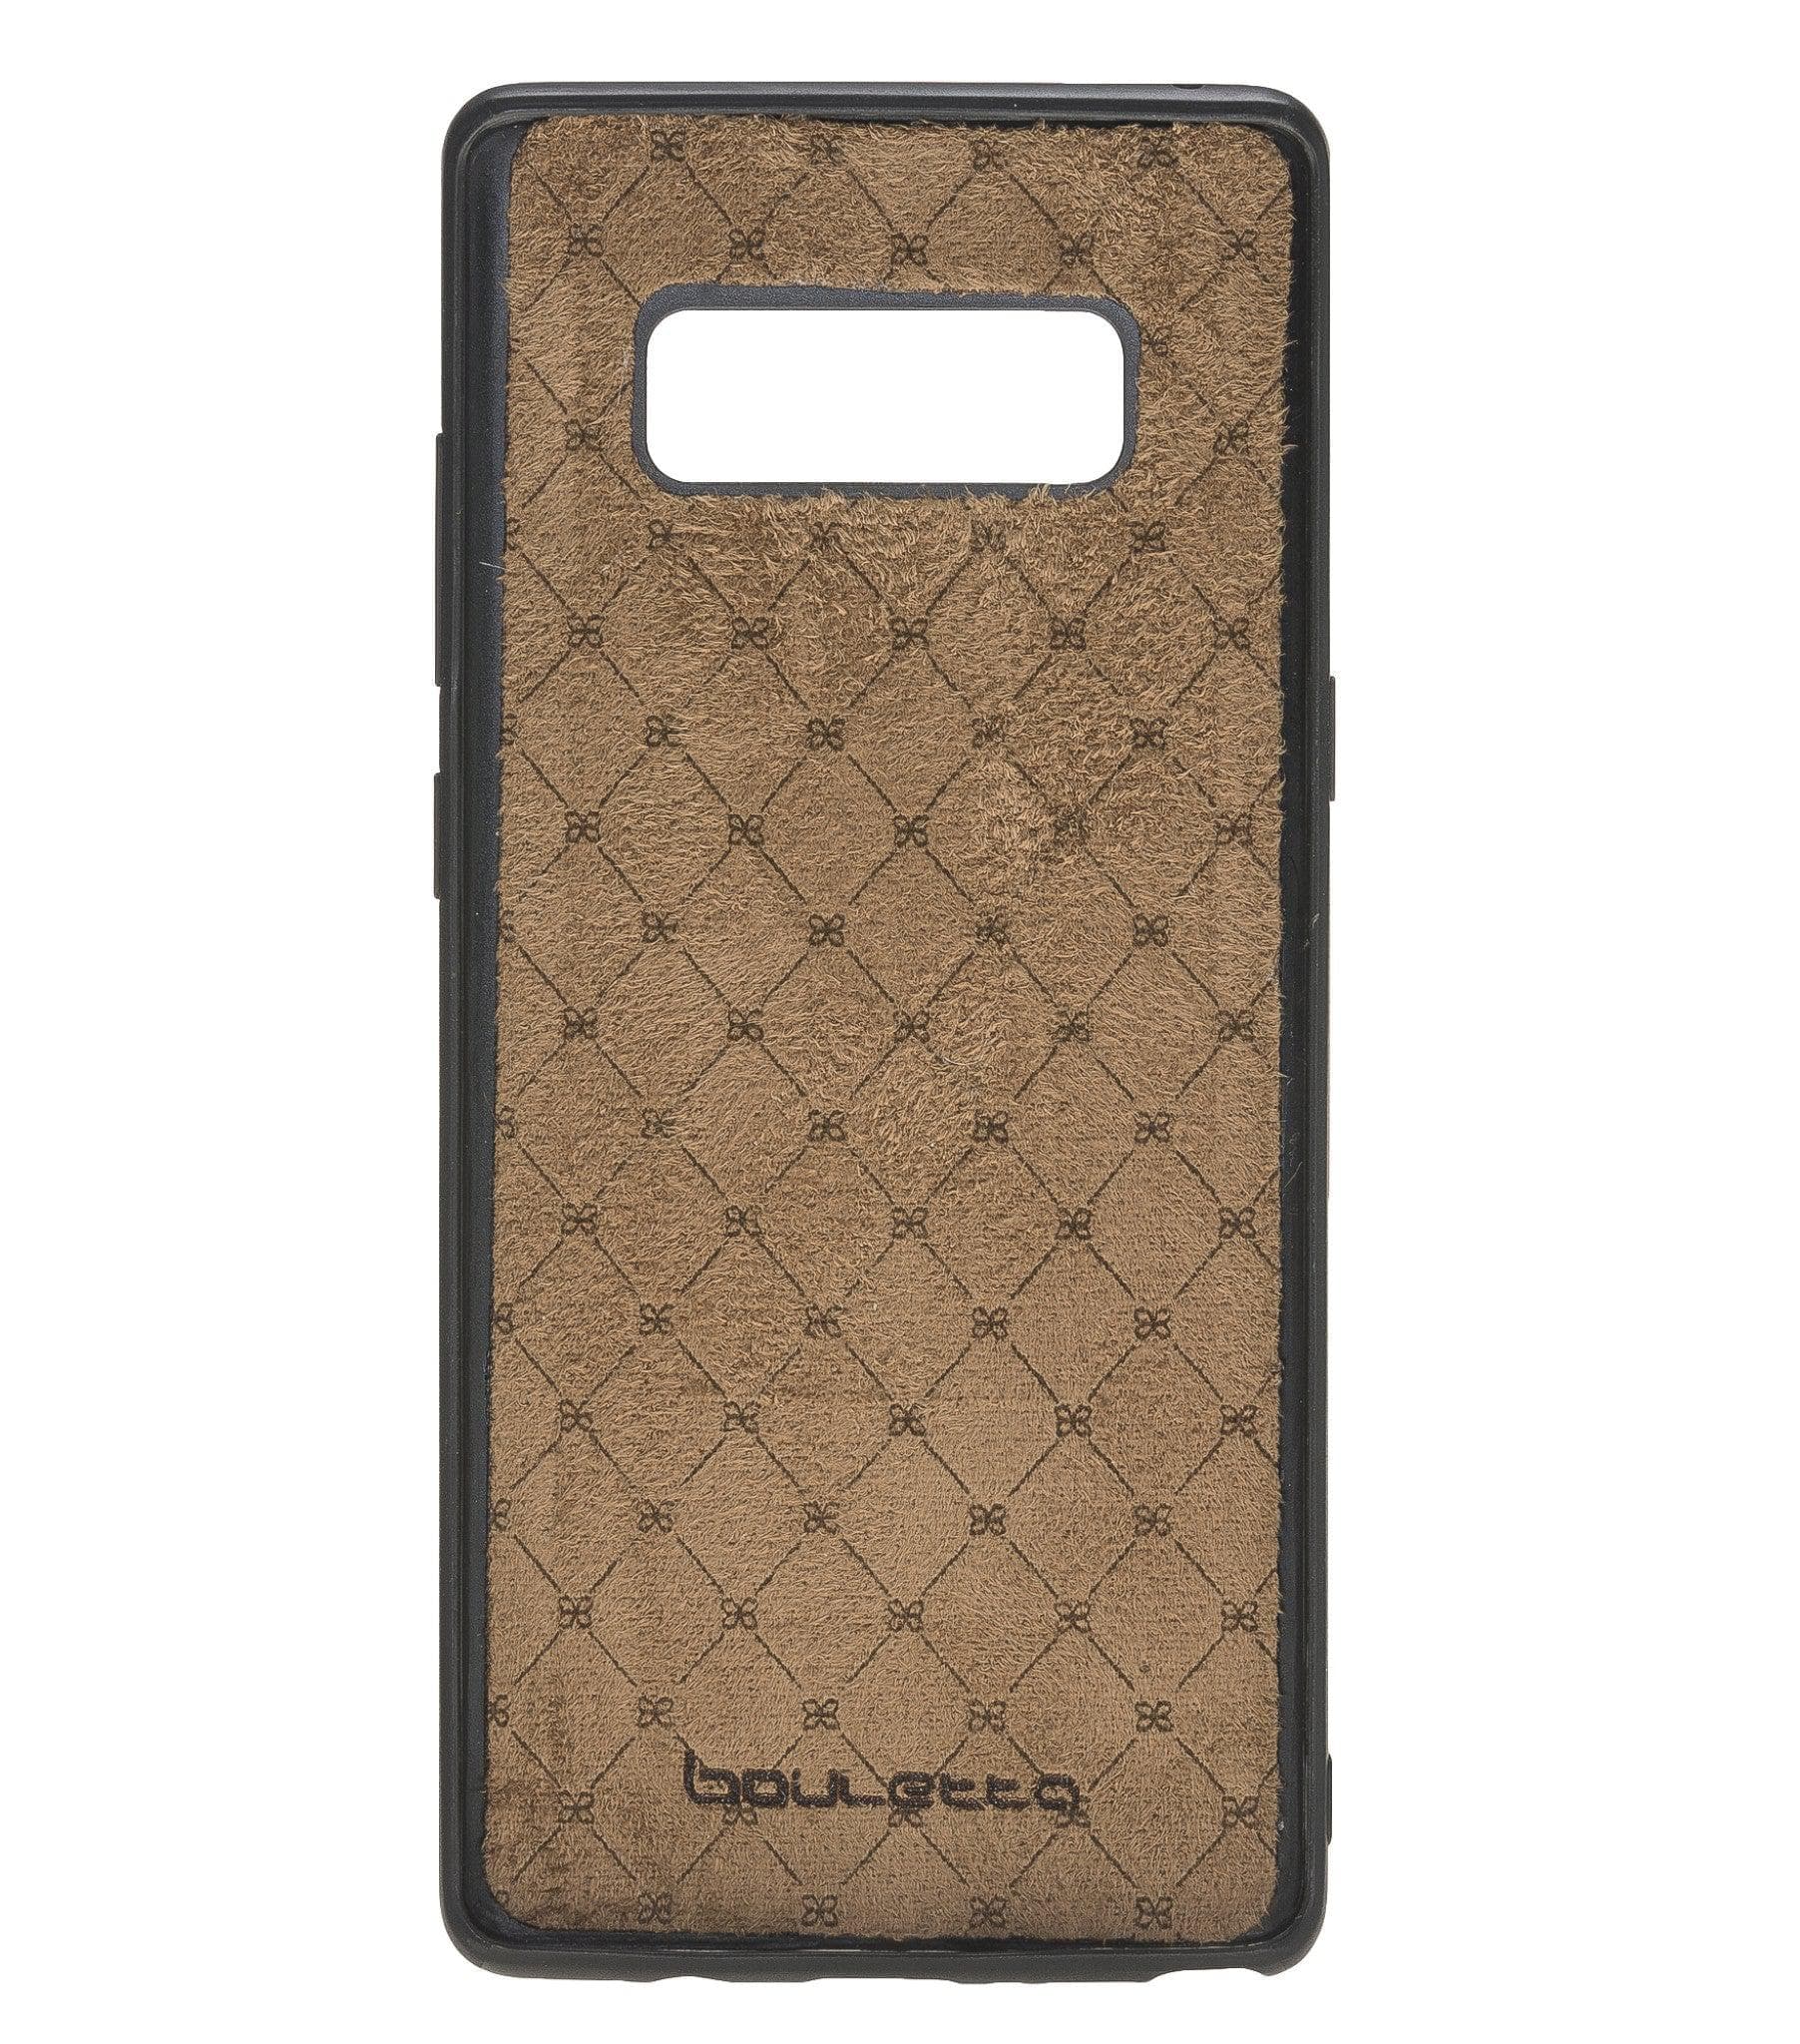 Samsung Galaxy Note 8 Leather Wallet Case Bouletta LTD